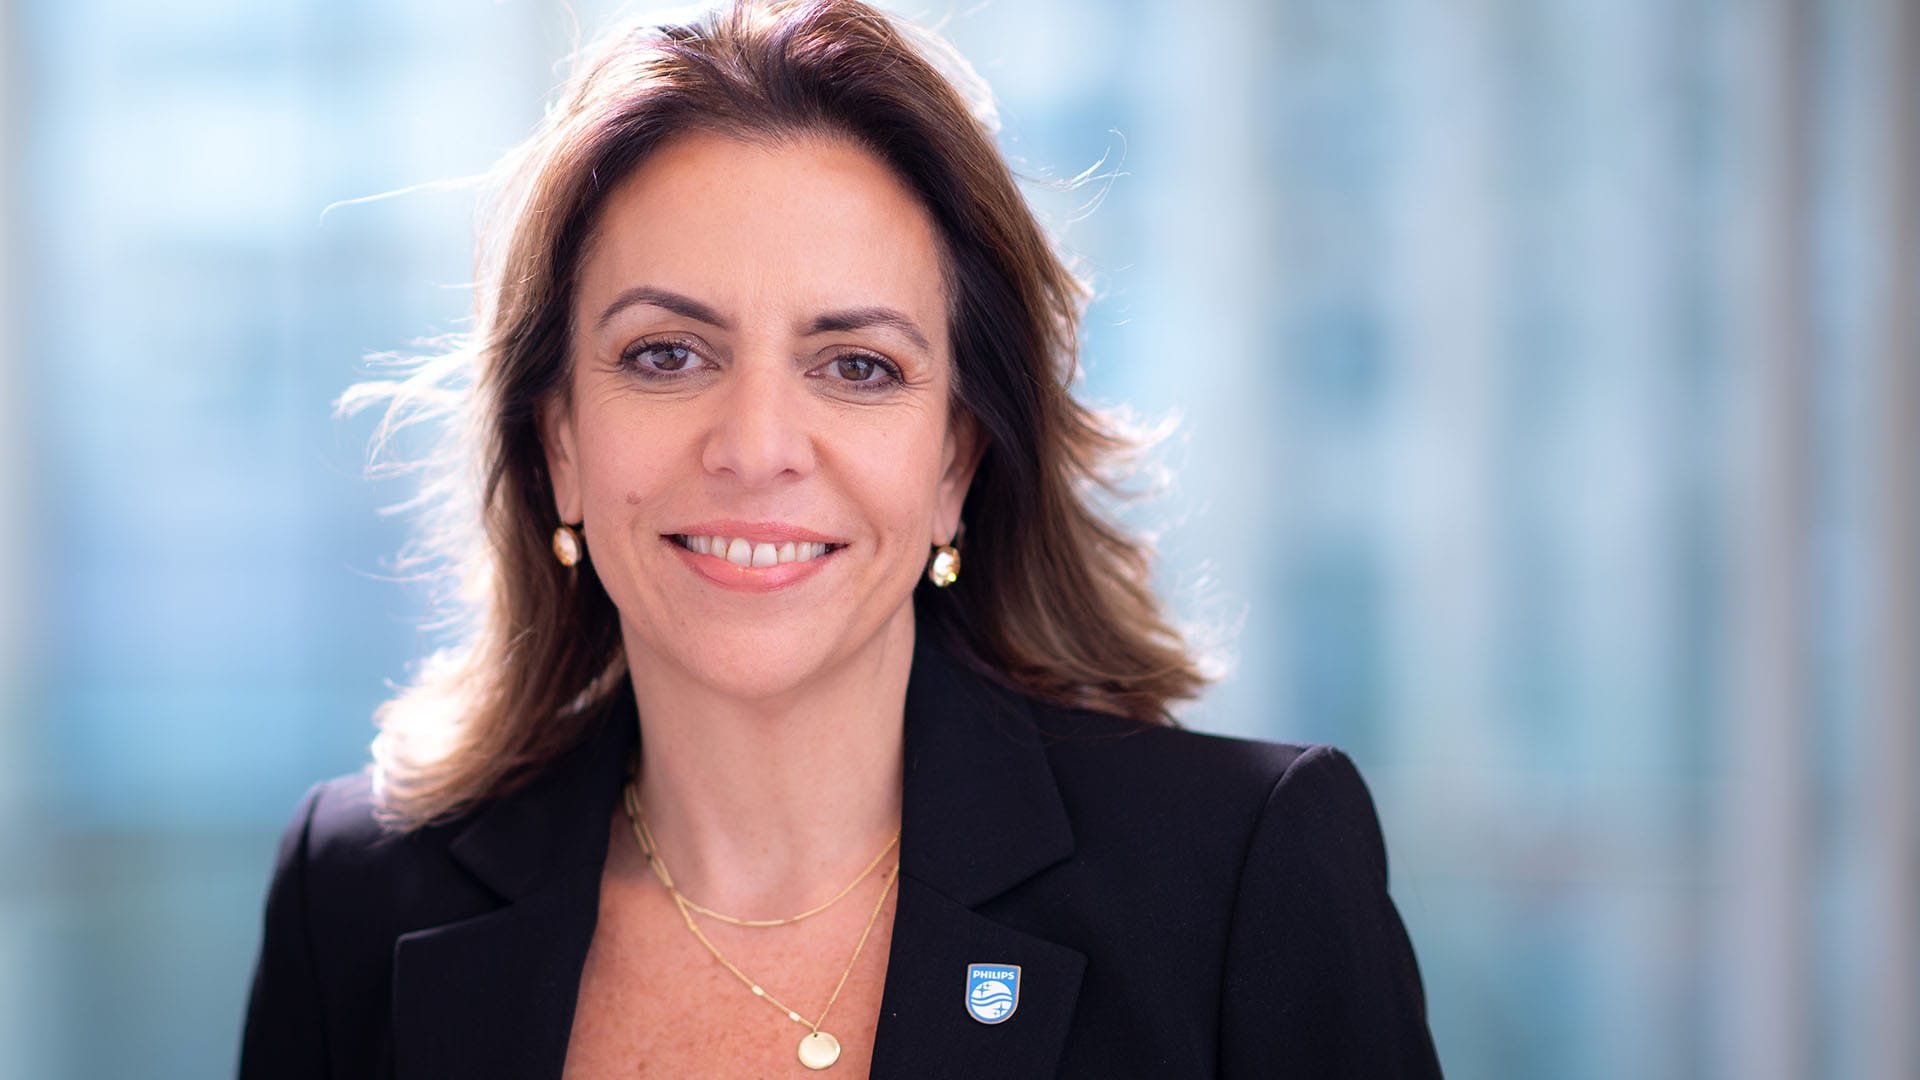 Meet Carla Goulart Peron, Philips’ Chief Medical Officer